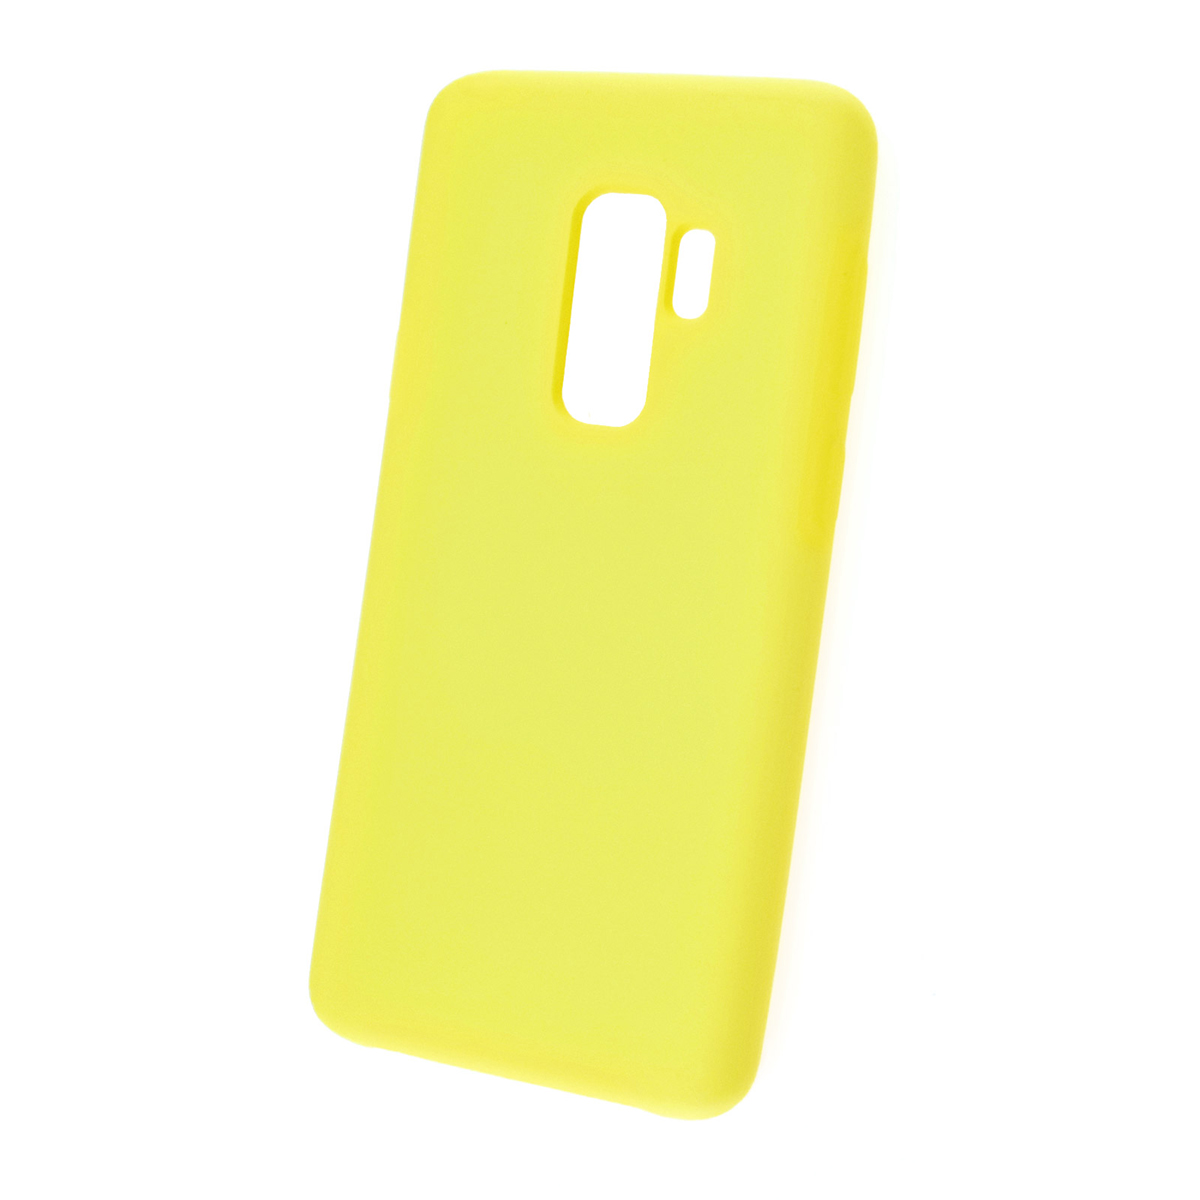 Чехол накладка Silicon Cover для SAMSUNG Galaxy S9 Plus (SM-G965), силикон, бархат, цвет ярко желтый.